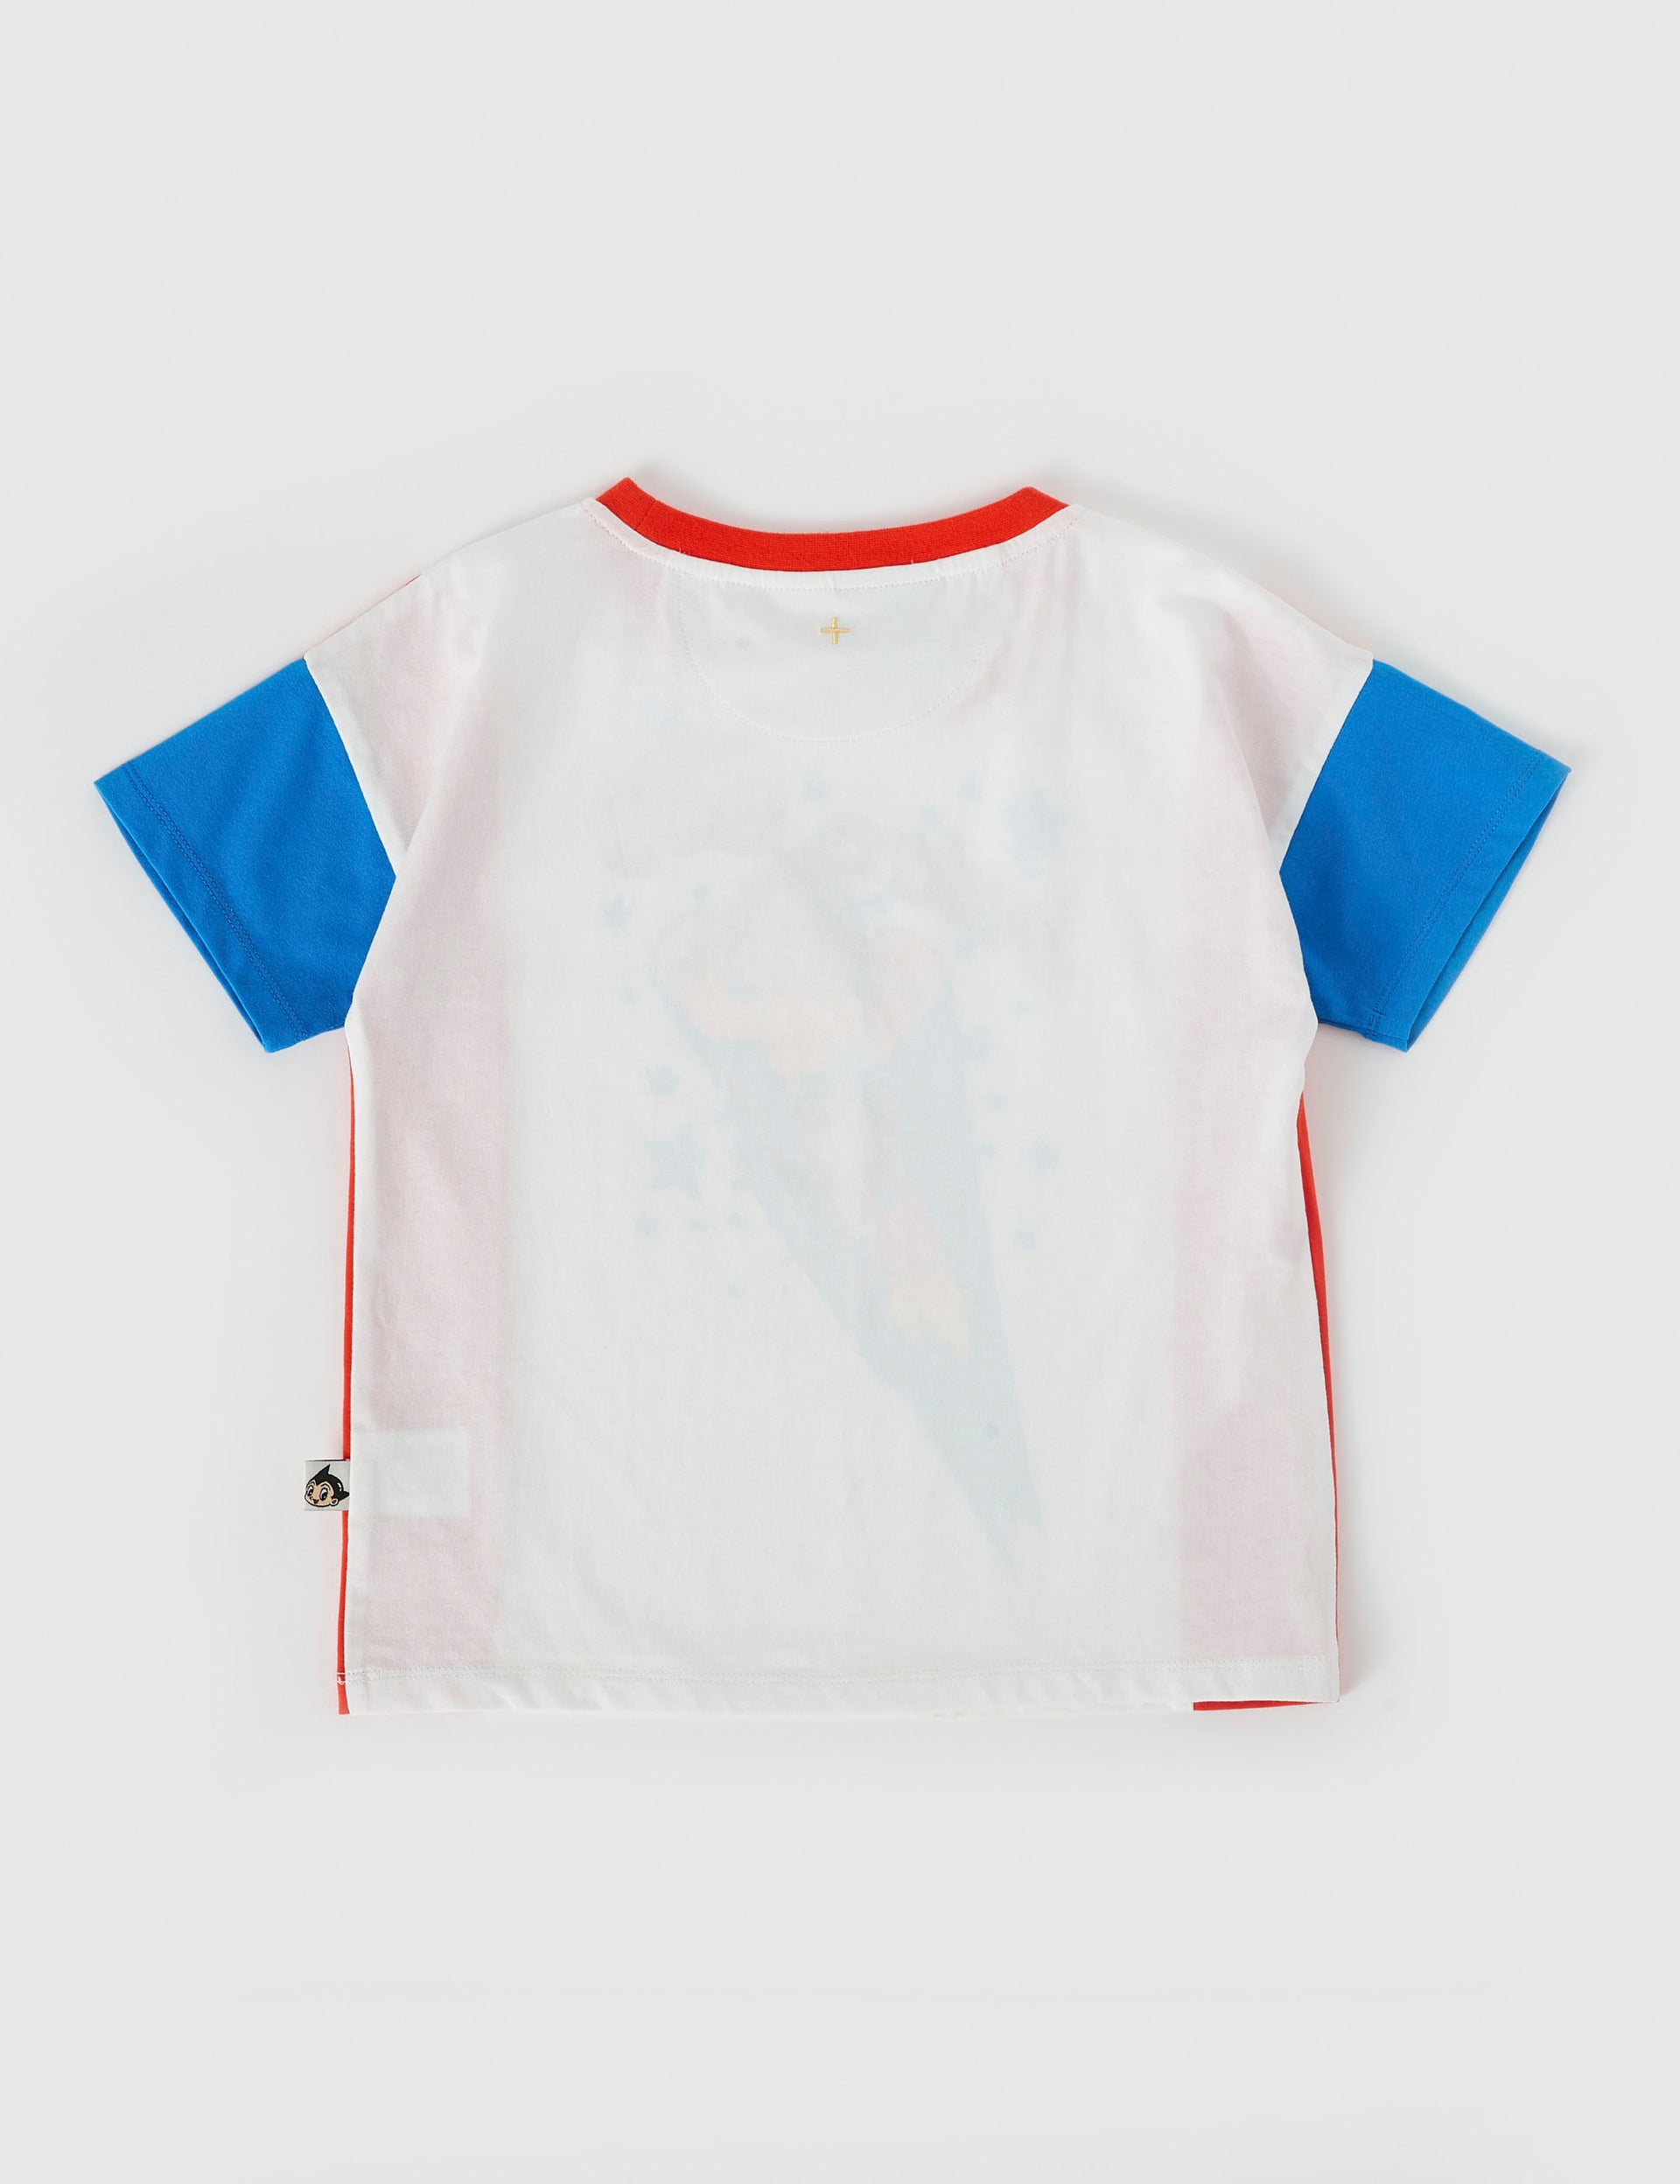 Astro Boy The Mighty Atom Vintage Print T-Shirt